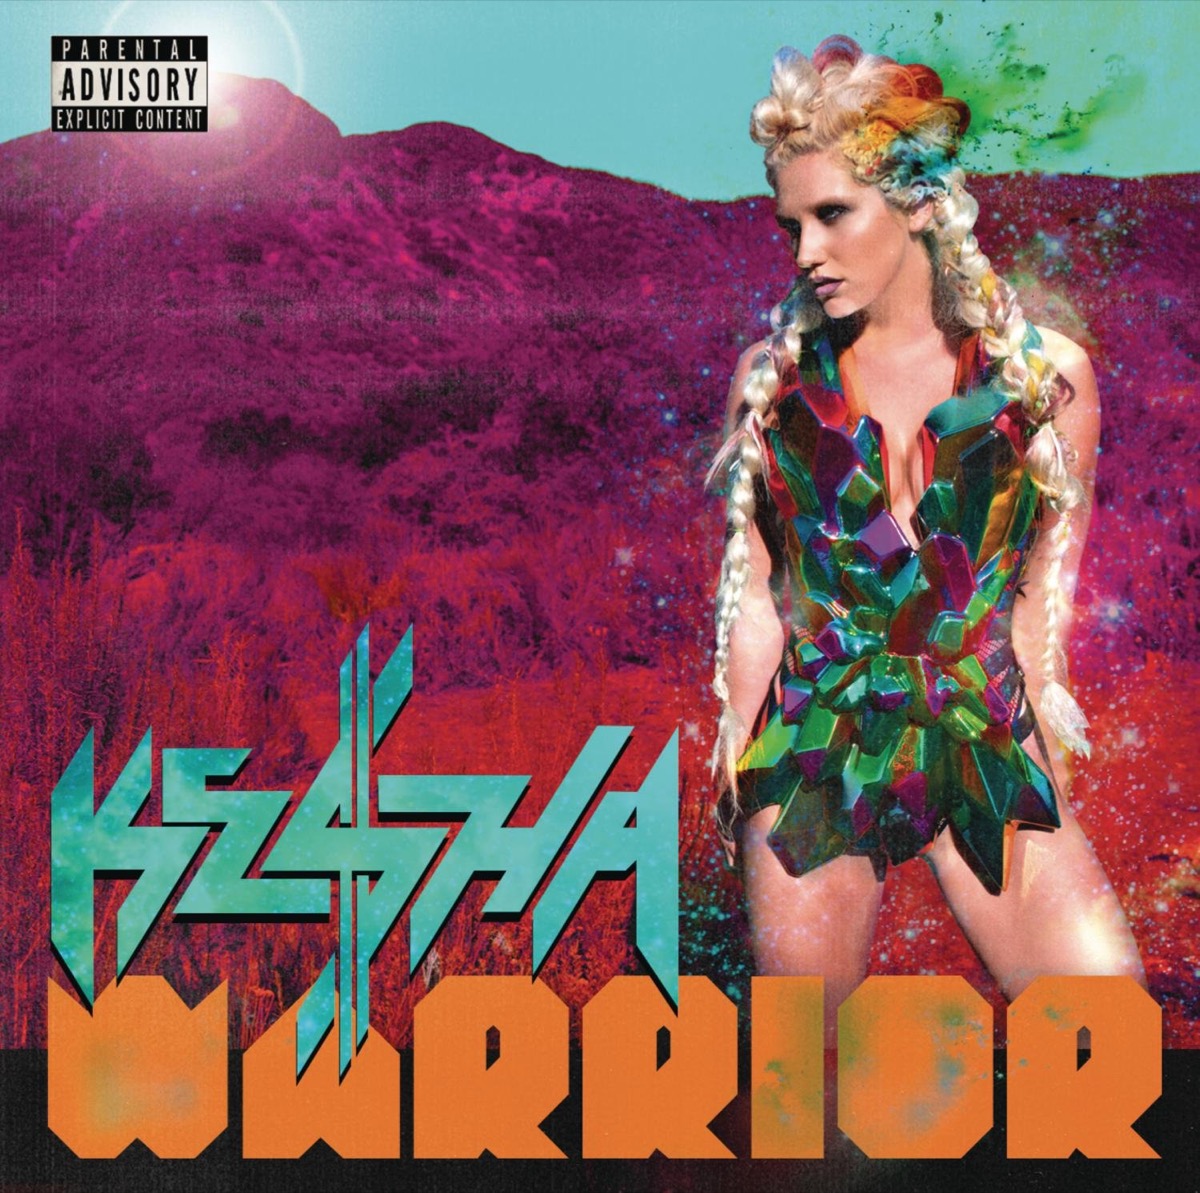 kesha warrior album cover